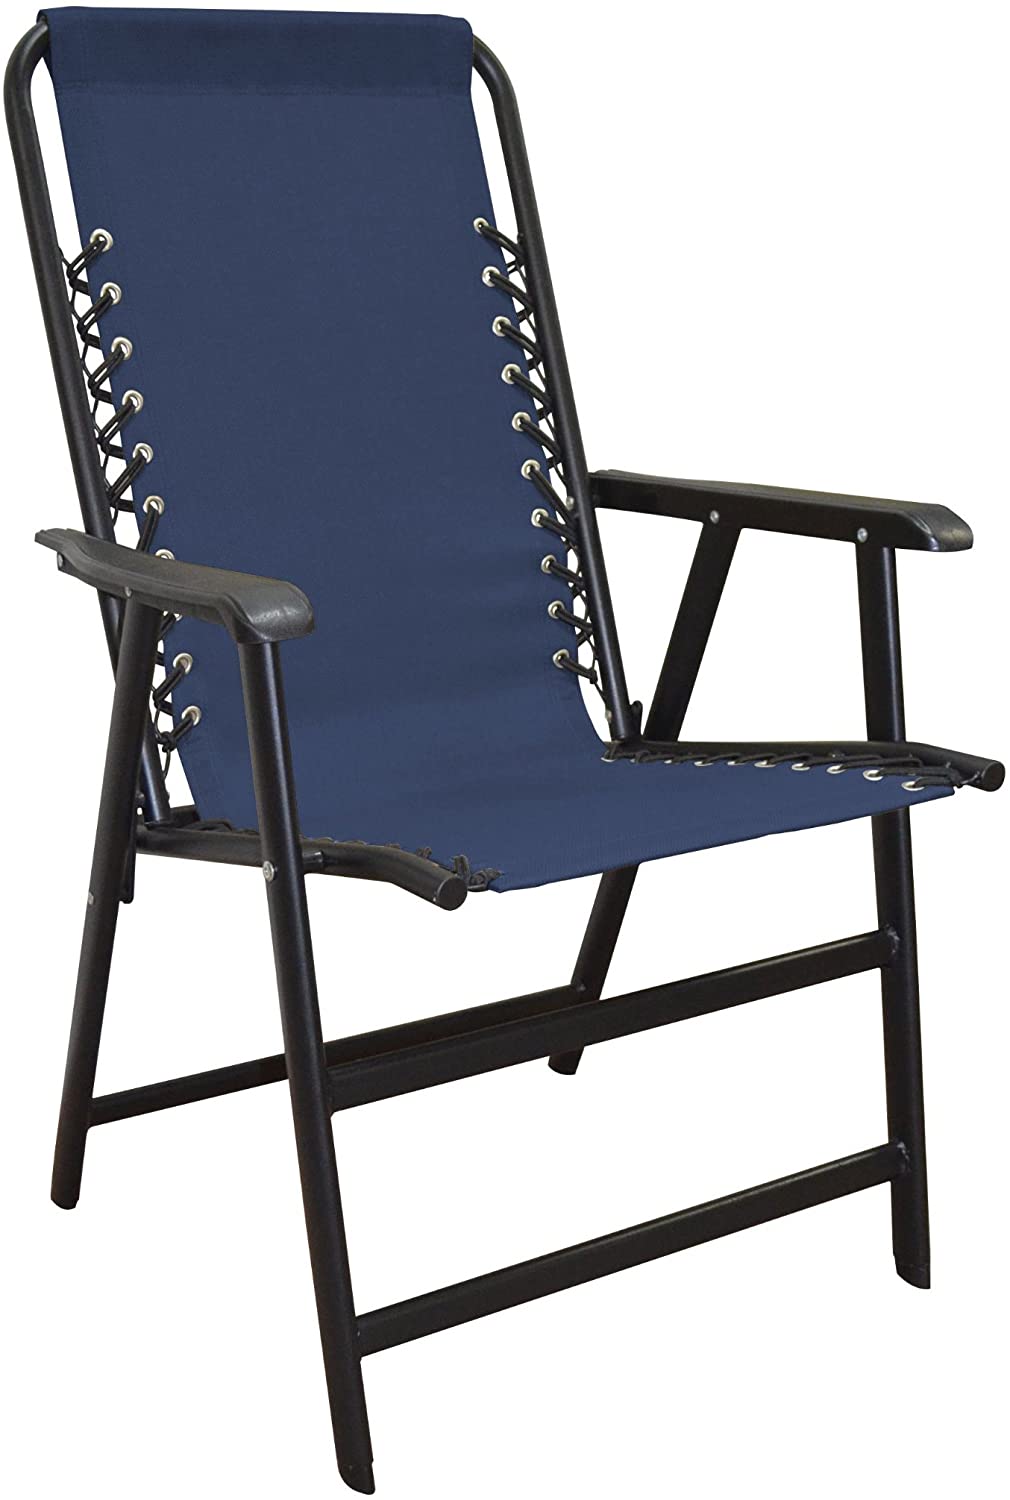 Caravan Sports Folding Suspension Chair